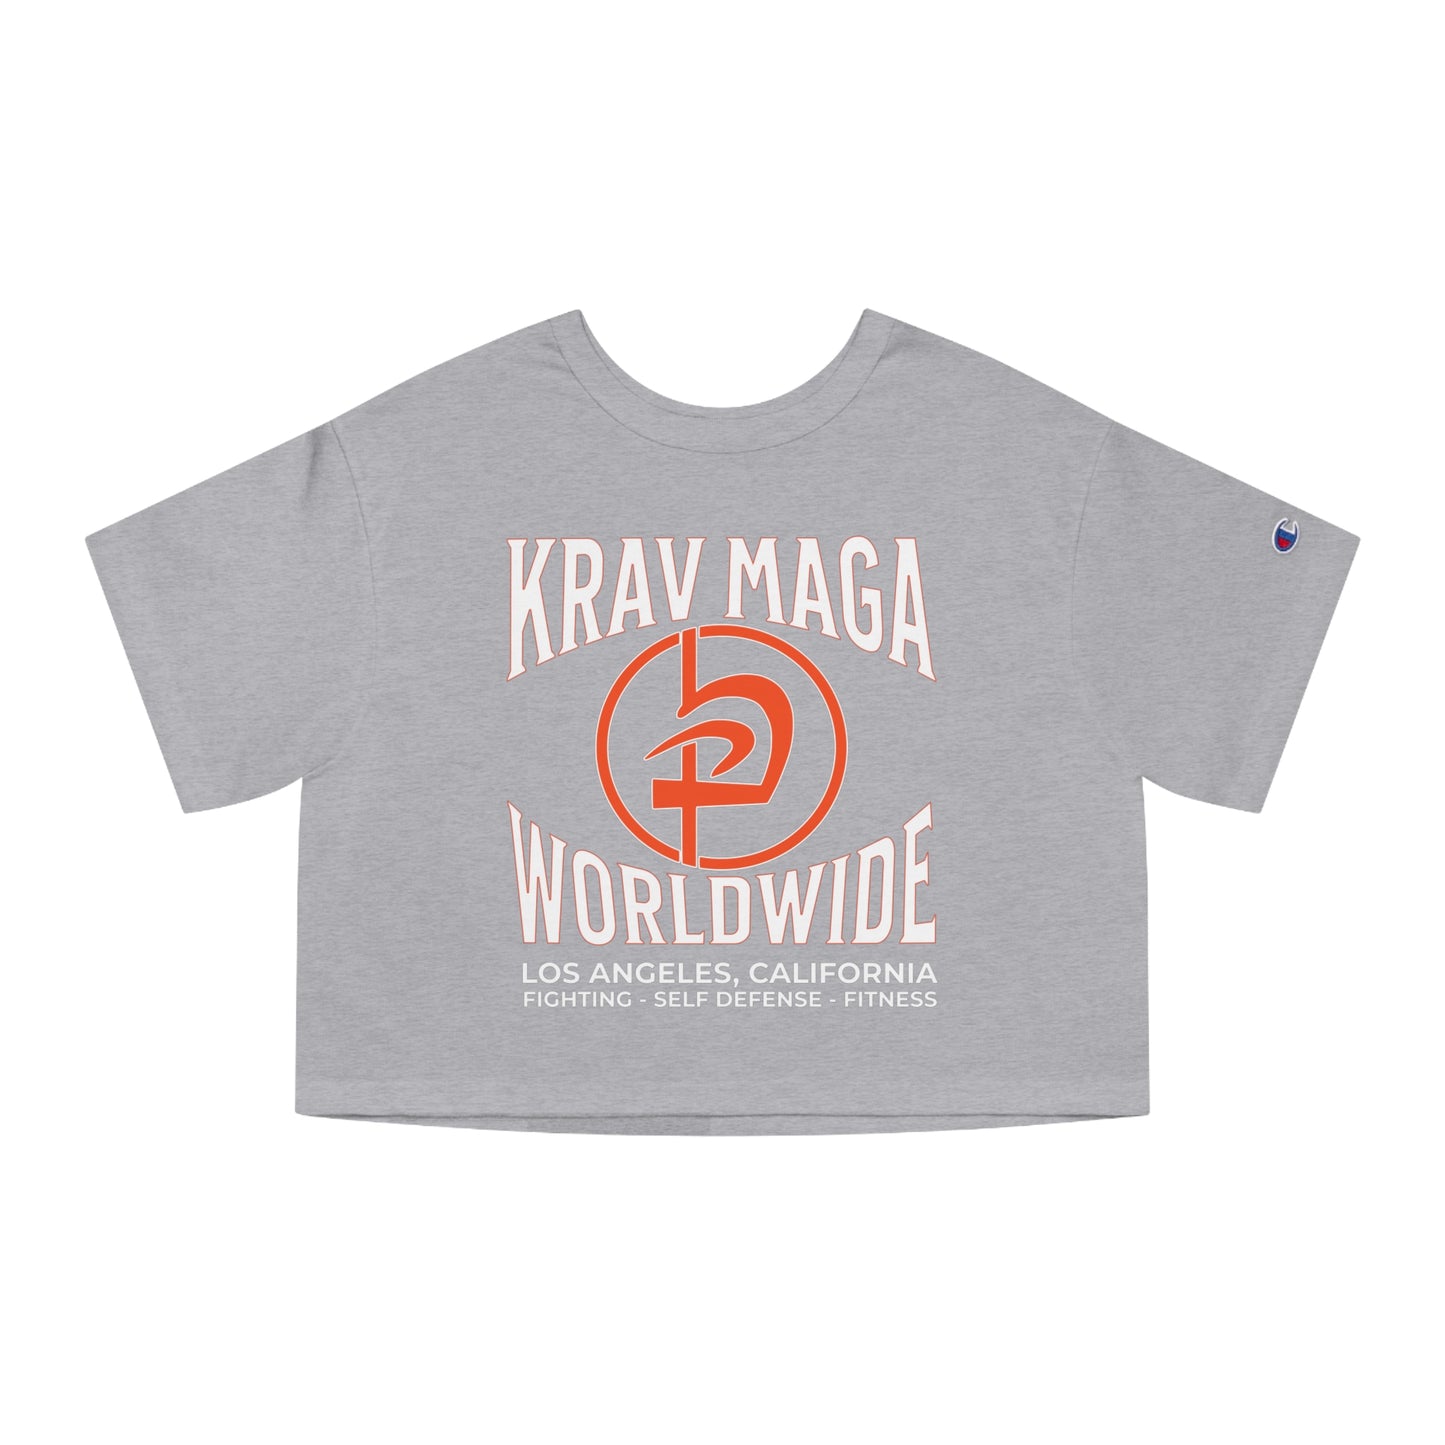 KMW - Worldwide Crop T-Shirt